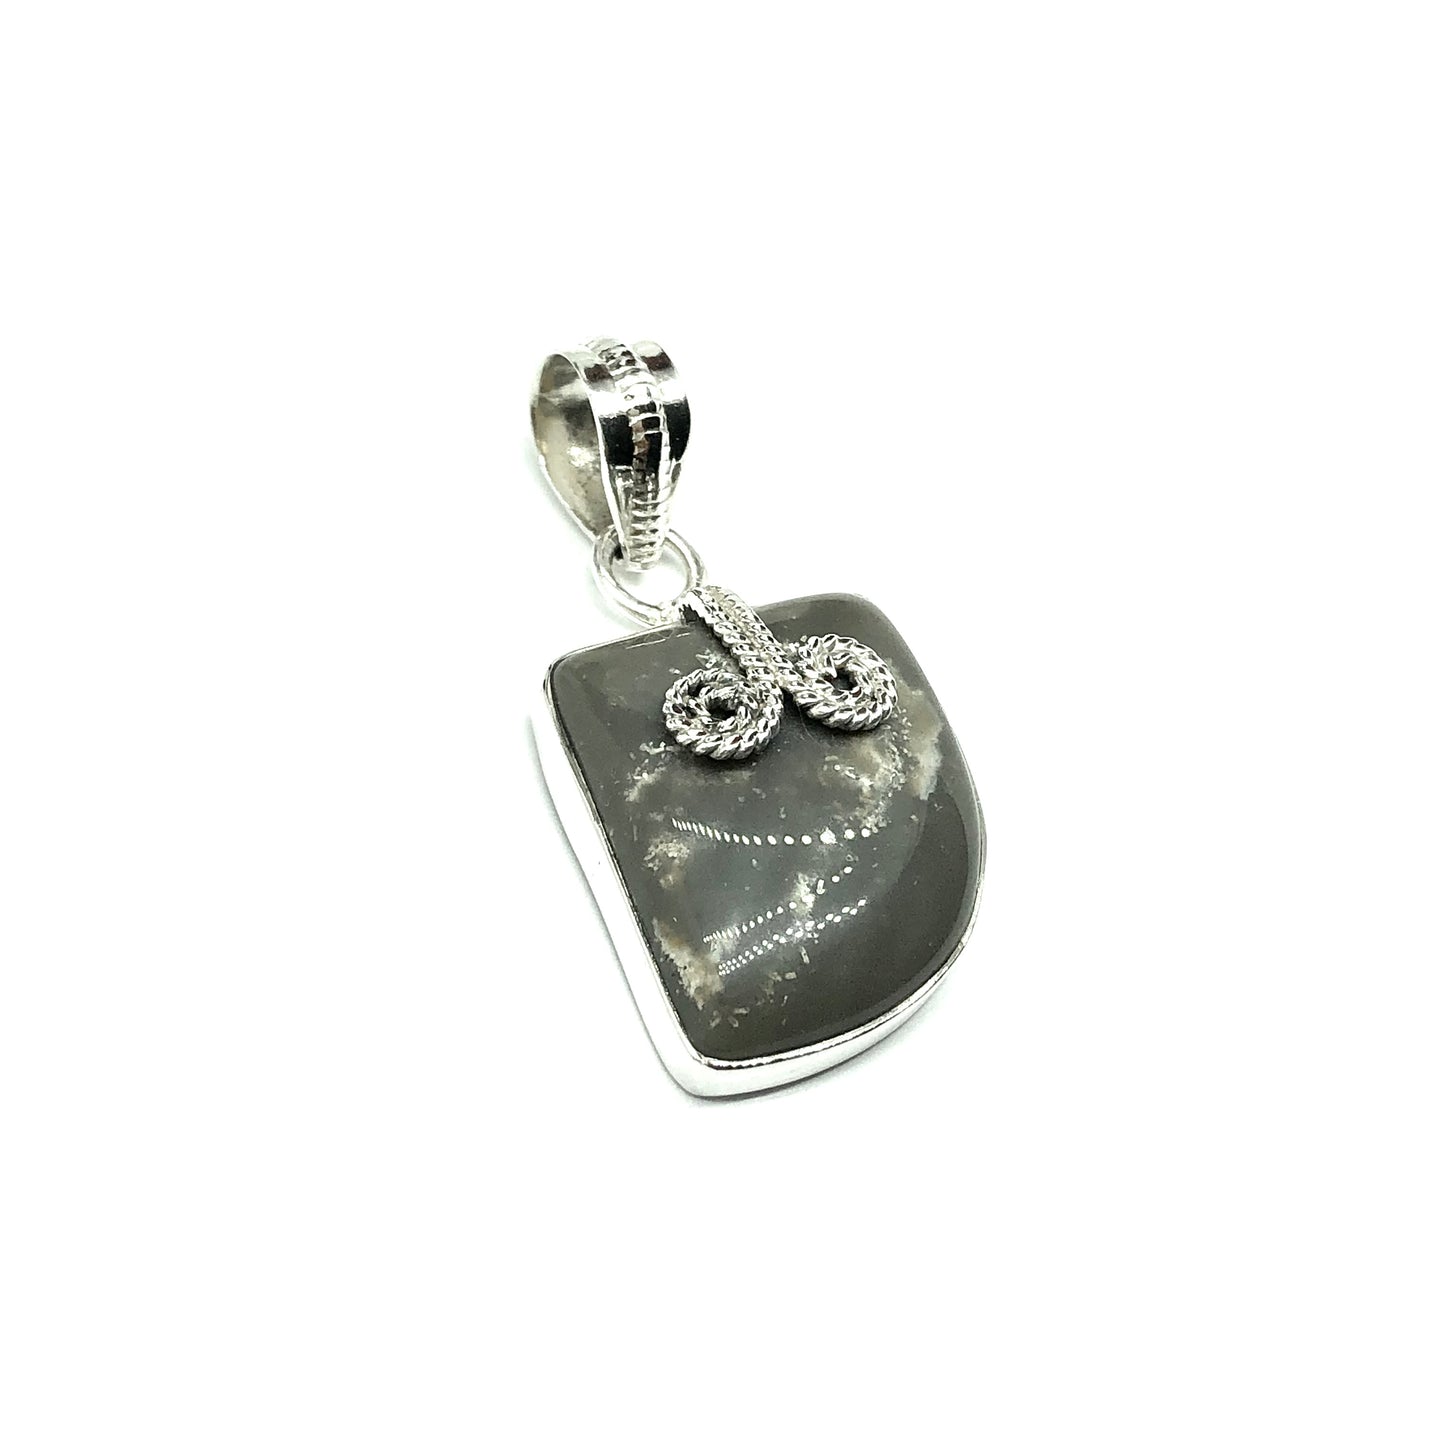 Jewelry | 925 Sterling Silver Pendant Edgy Asymmetrical Design Khaki Brown Stone Mens Womens - Blingschlingers.com USA